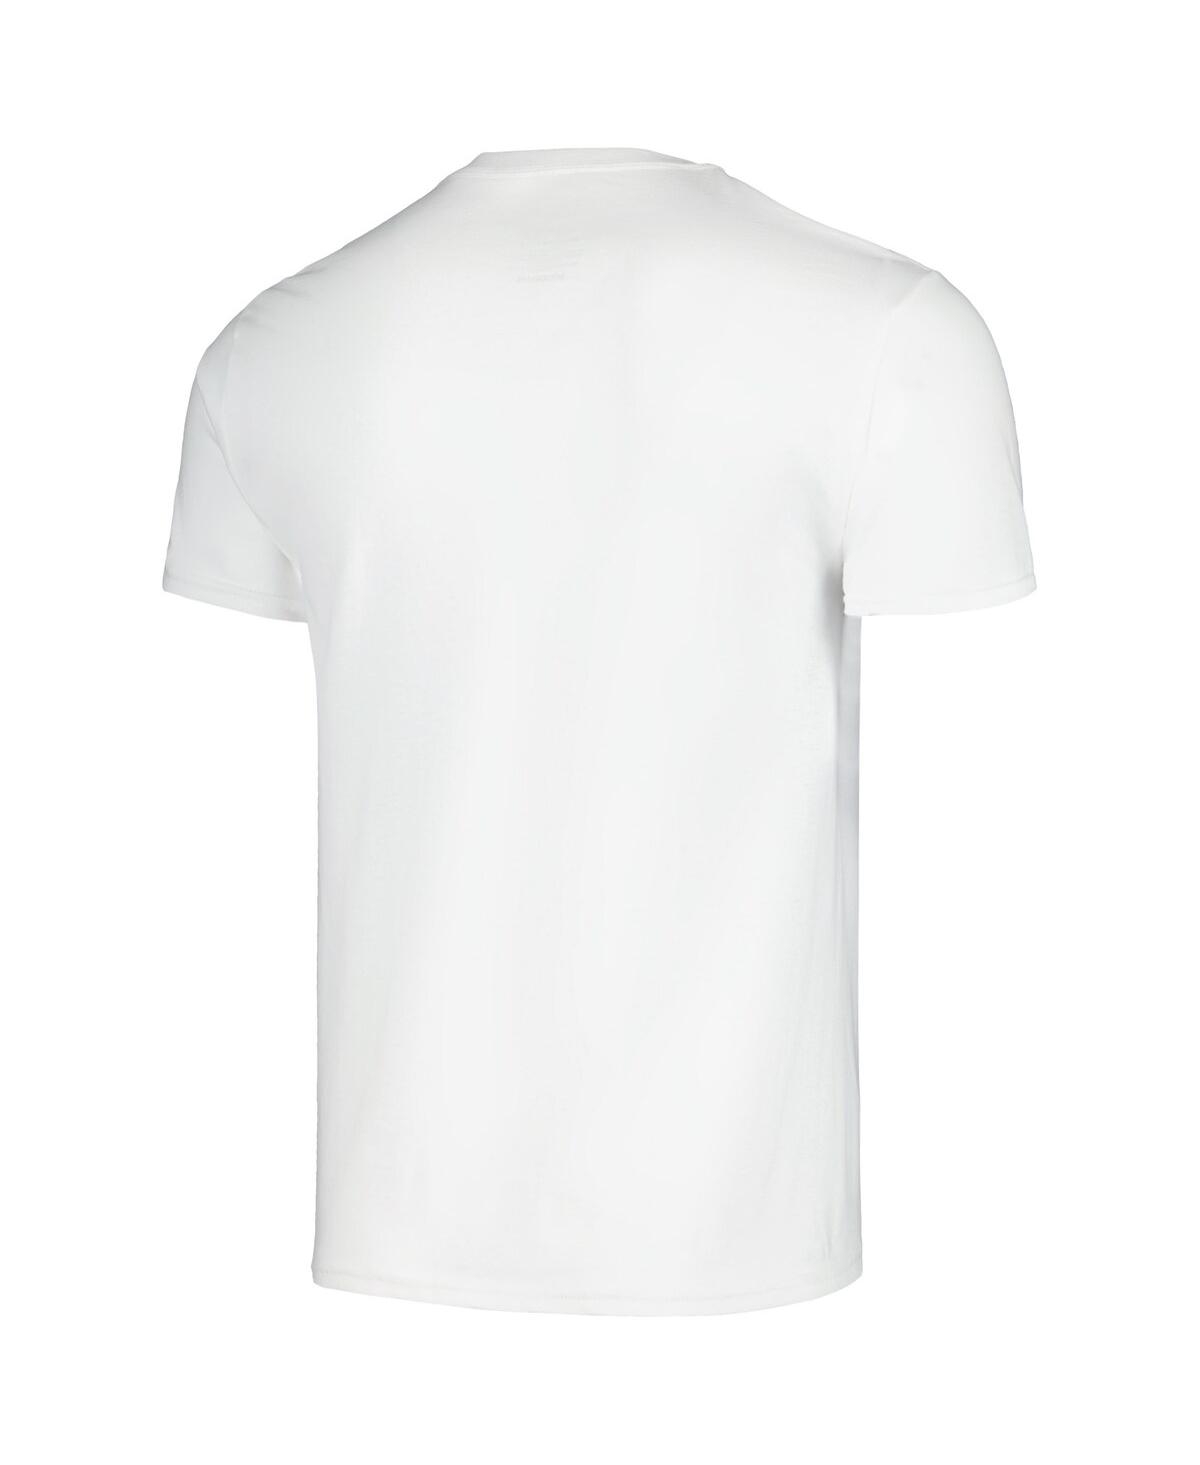 Shop Manhead Merch Men's  White Toto Turn Back Graphic T-shirt